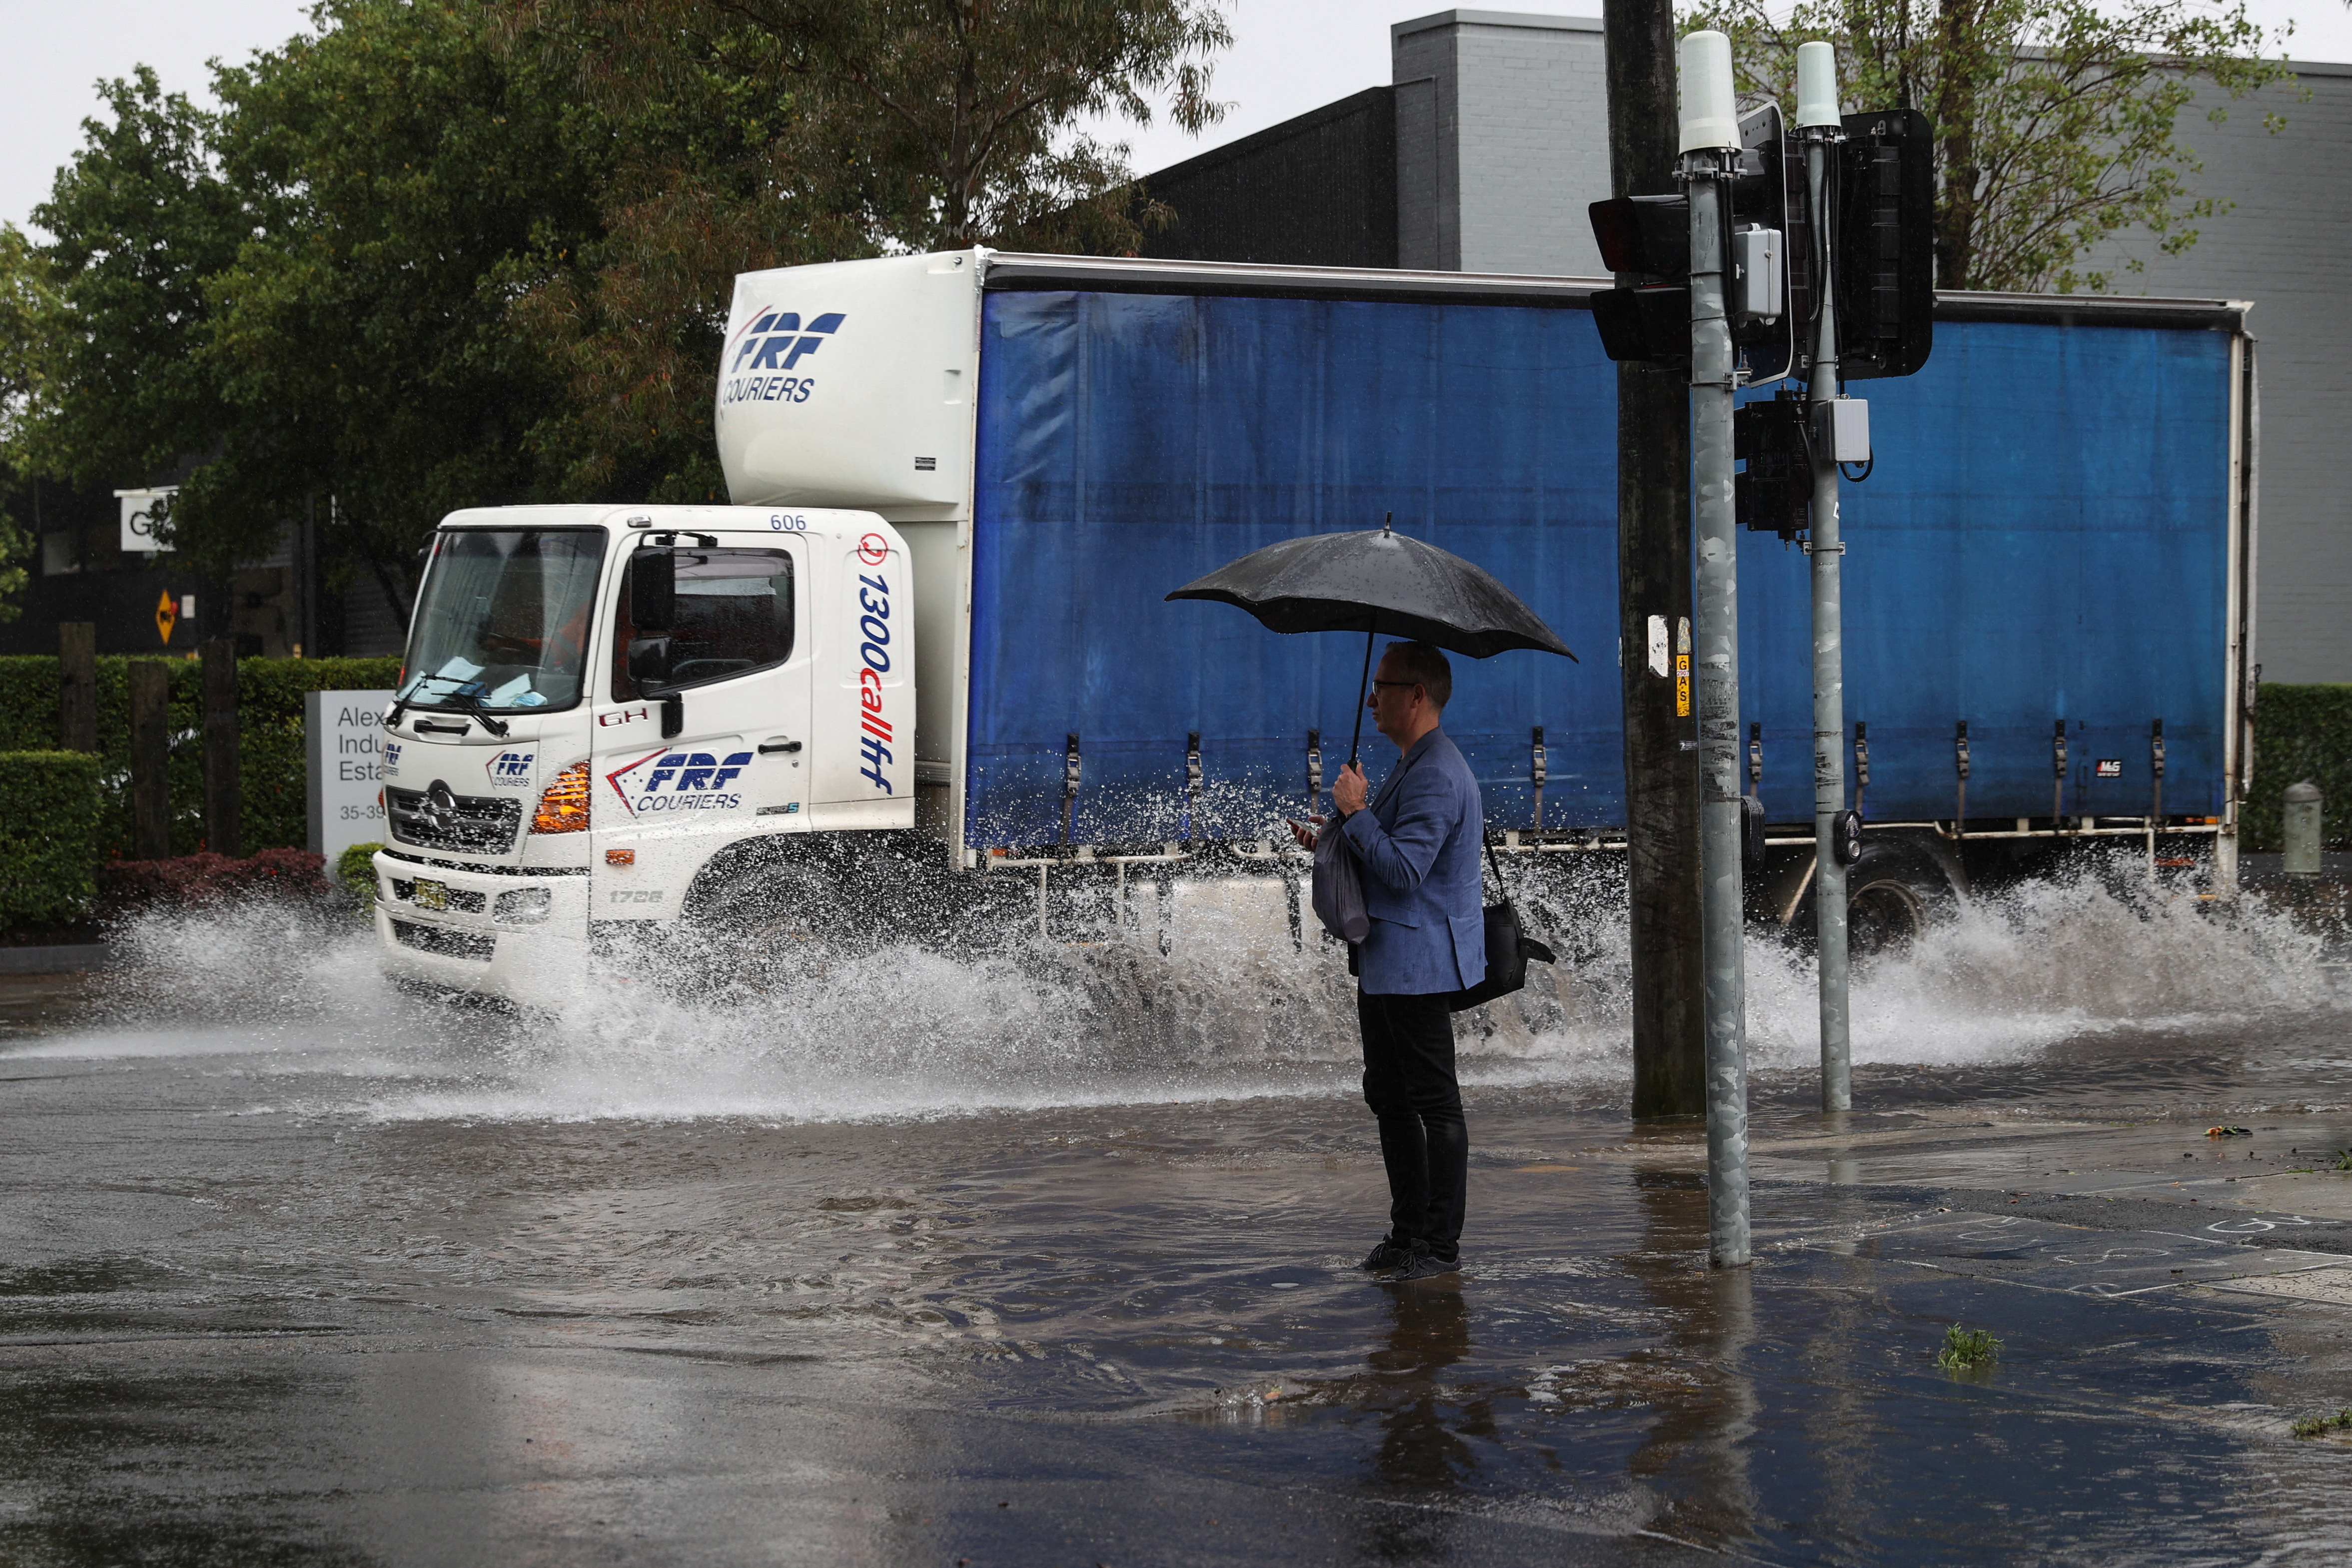 Sydney set to smash rainfall records as Australia braces for more floods